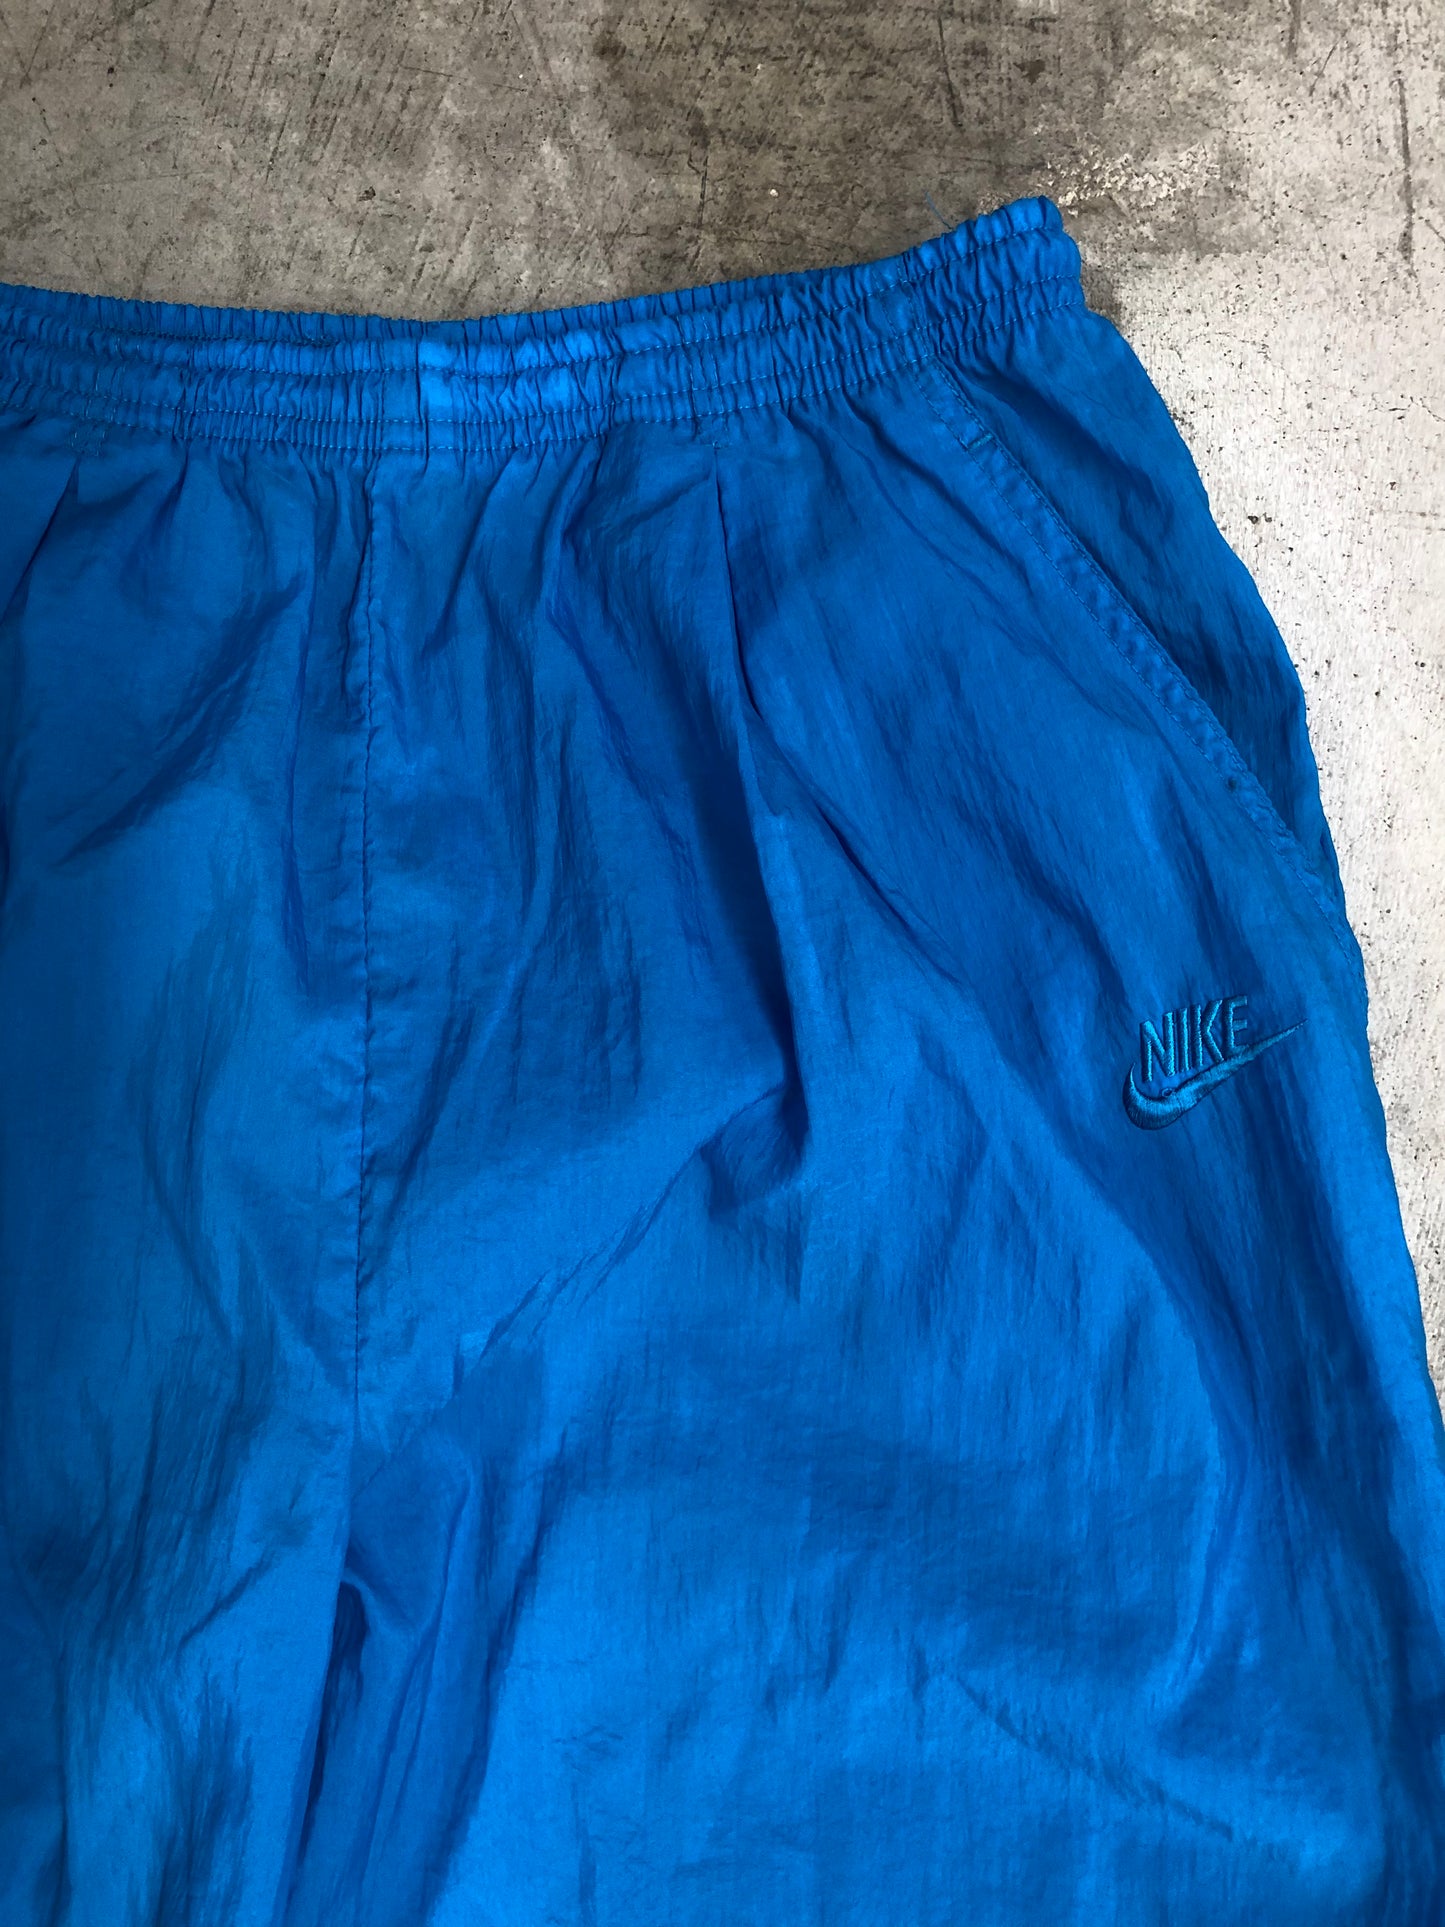 VTG Nike Turquoise Track Pants Sz XL